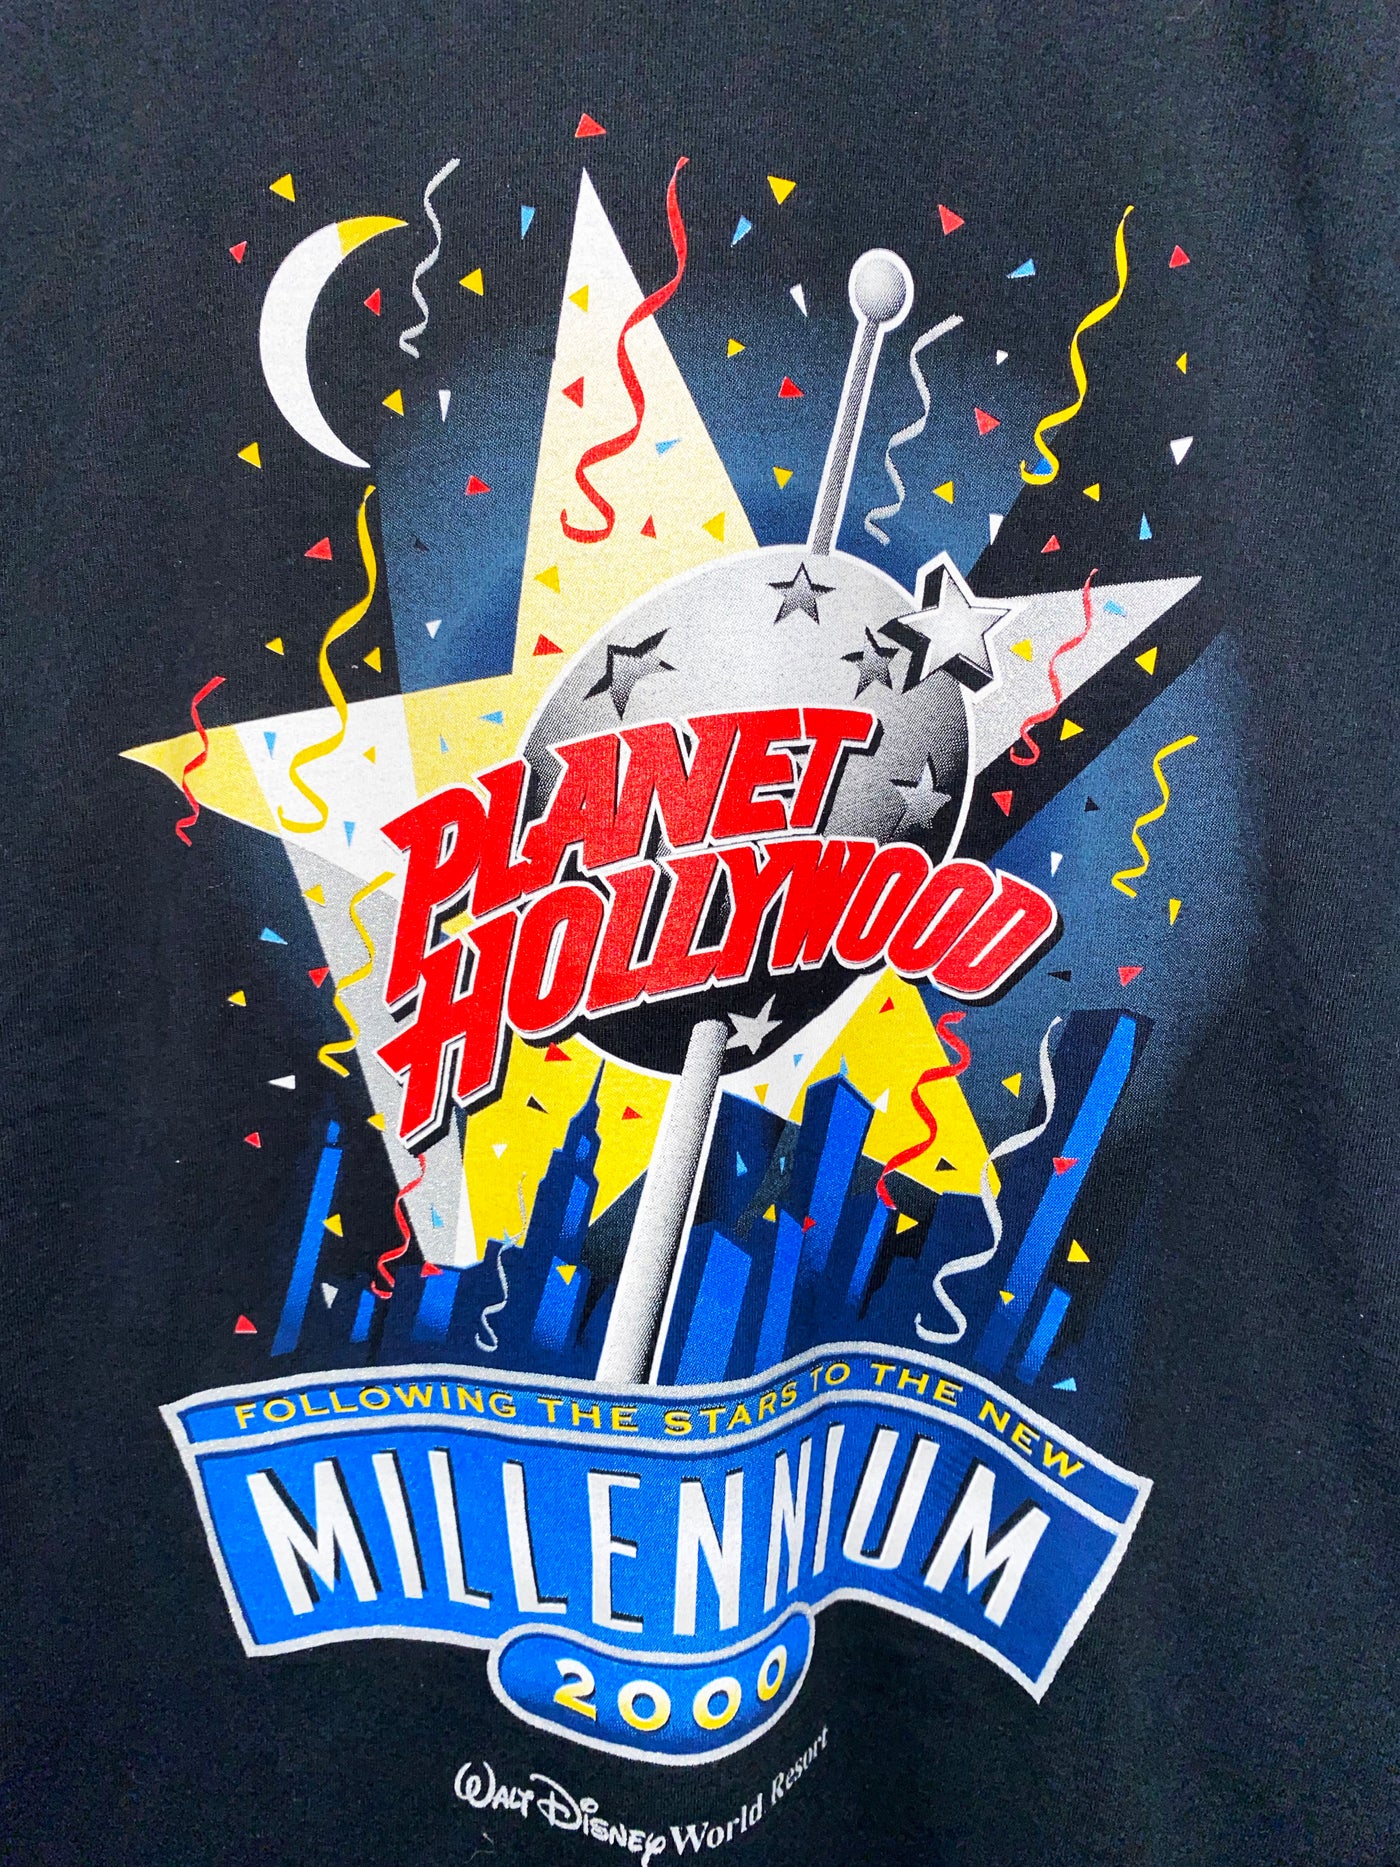 Vintage Planet Hollywood Millennium T-Shirt